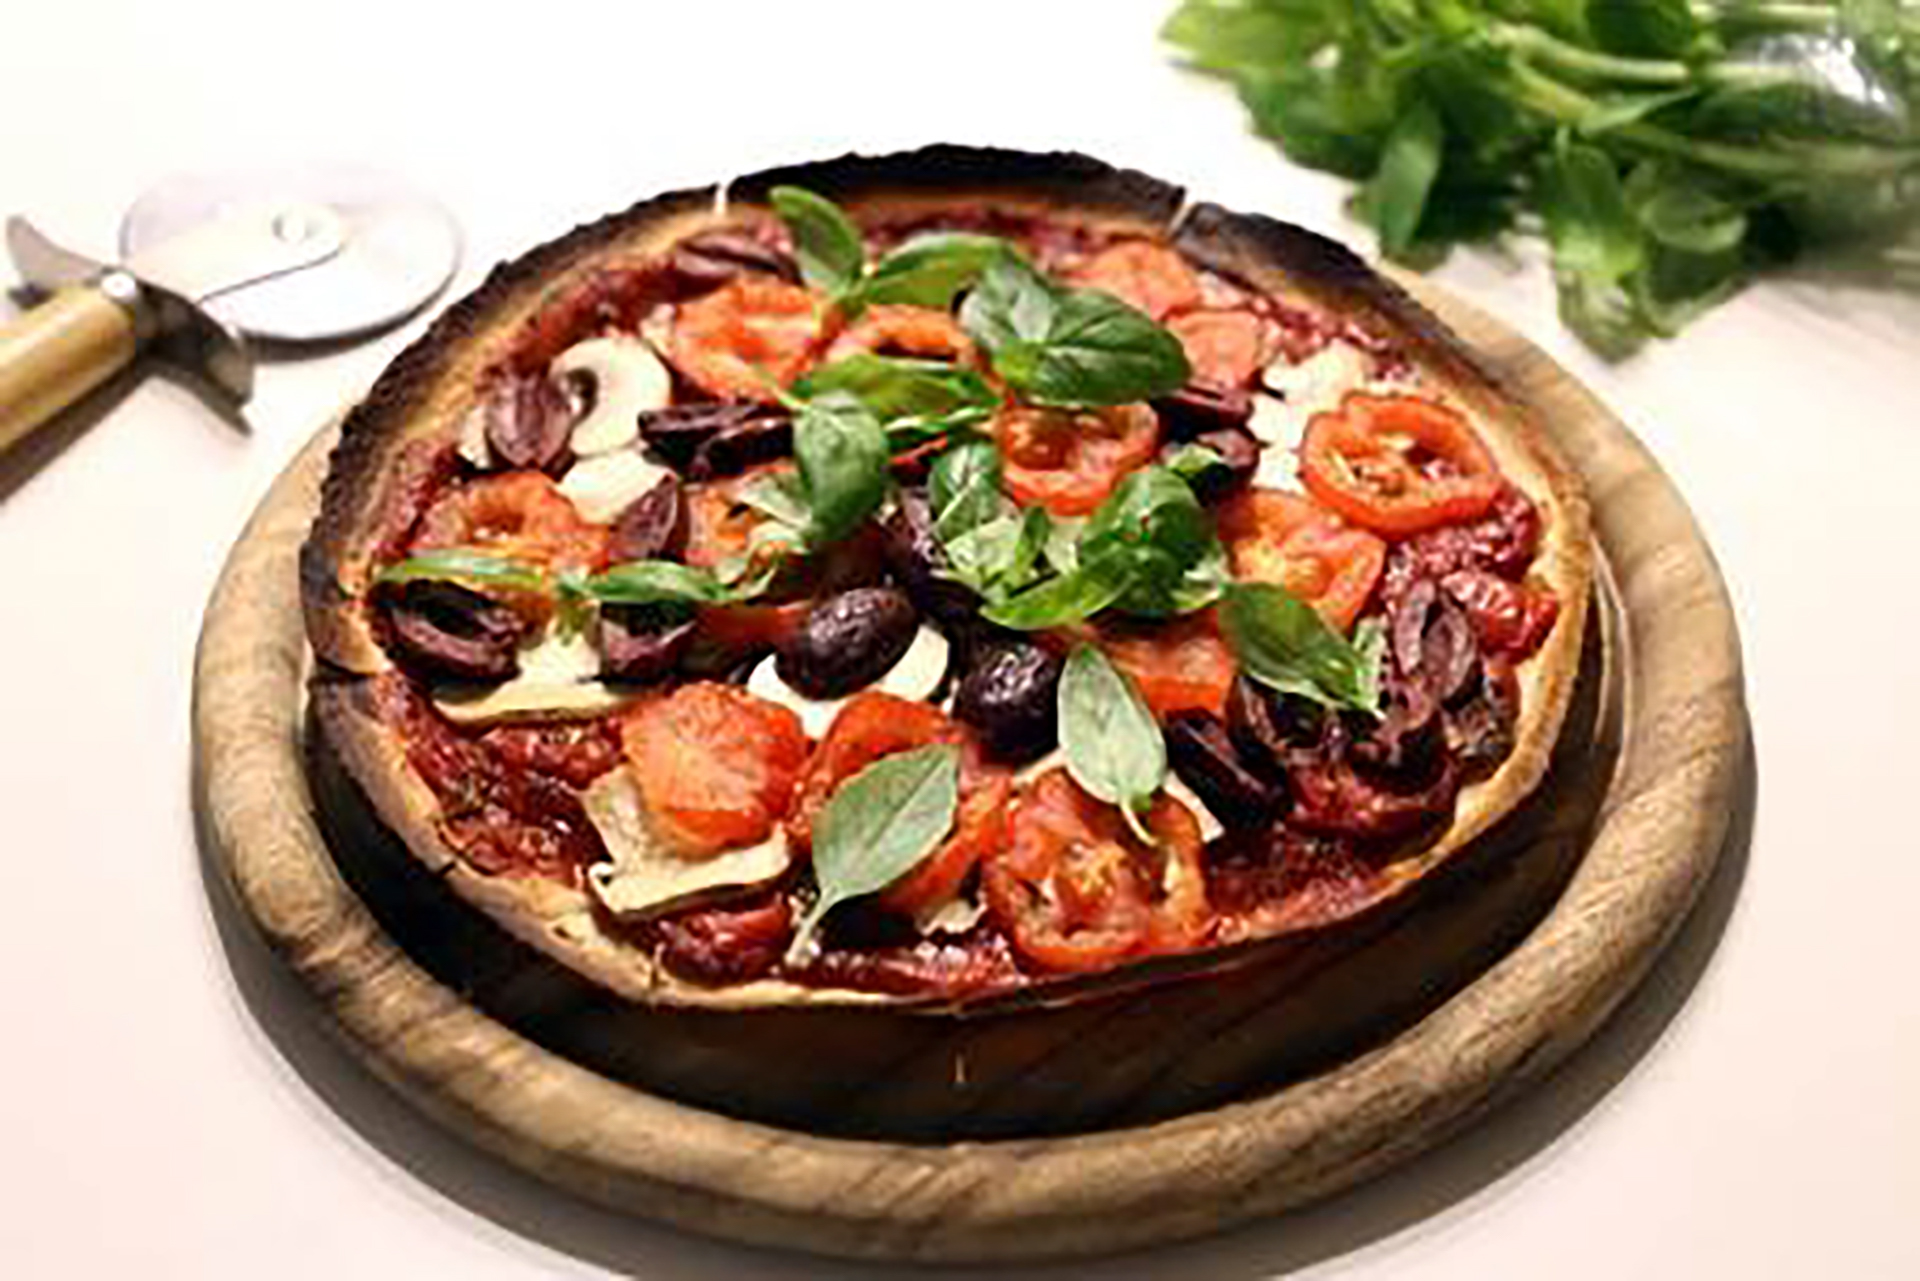 Mushroom and olive pizza with sundried tomato pesto recipe | Live Better